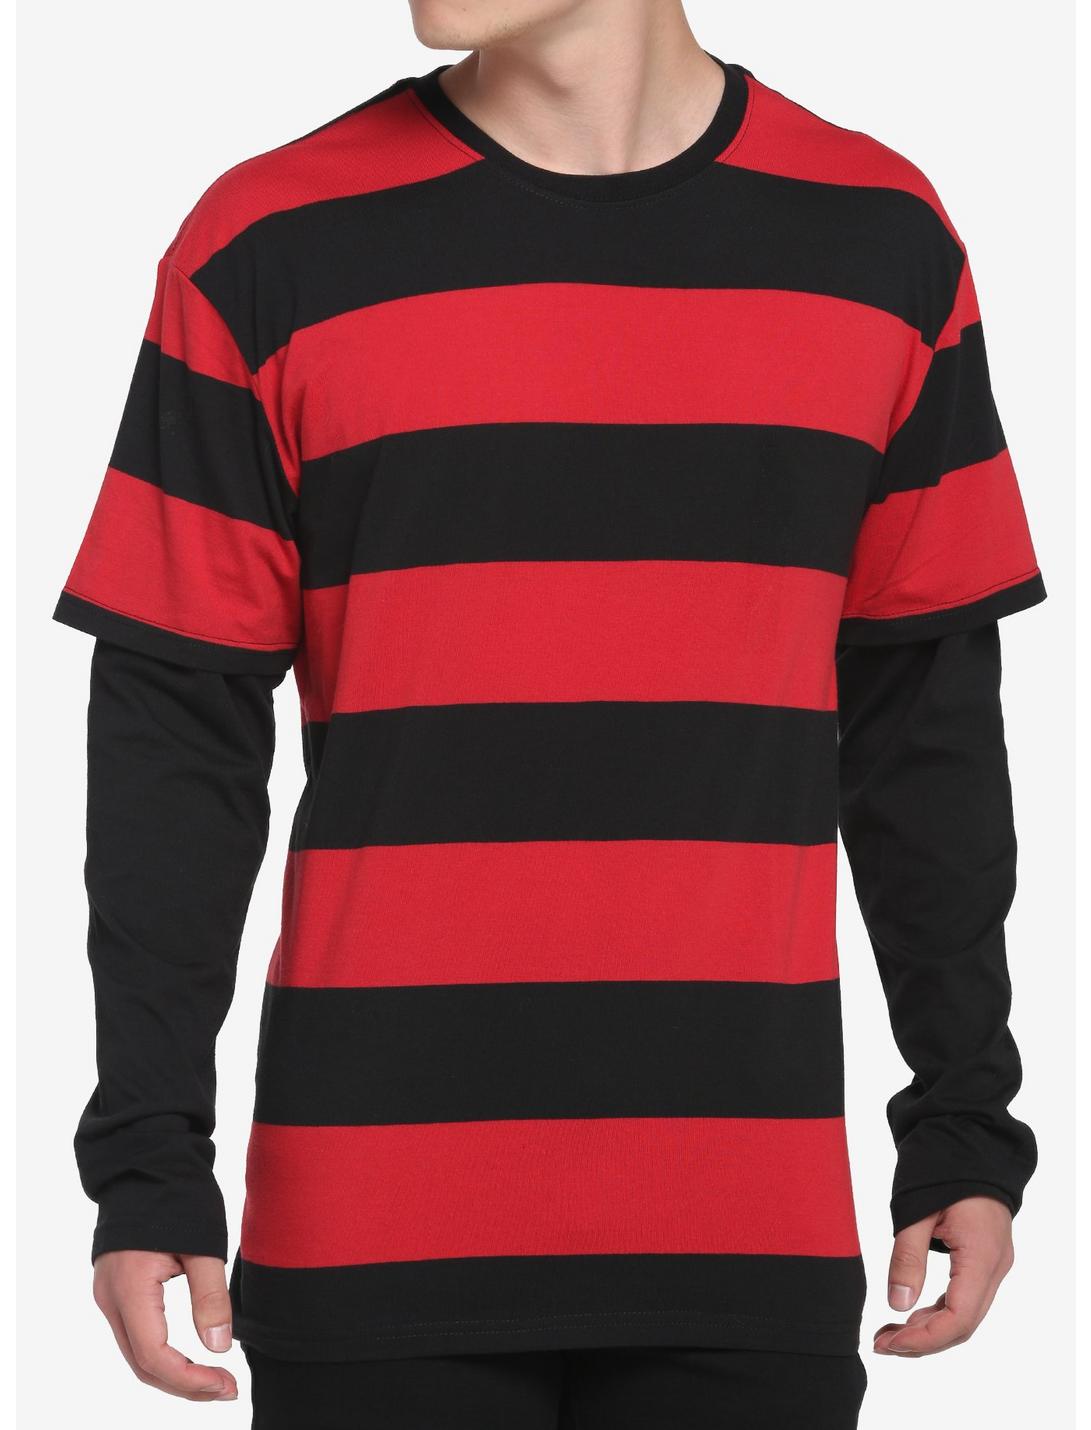 Forbedre fingeraftryk husdyr Black & Red Stripe Twofer Long-Sleeve T-Shirt | Hot Topic